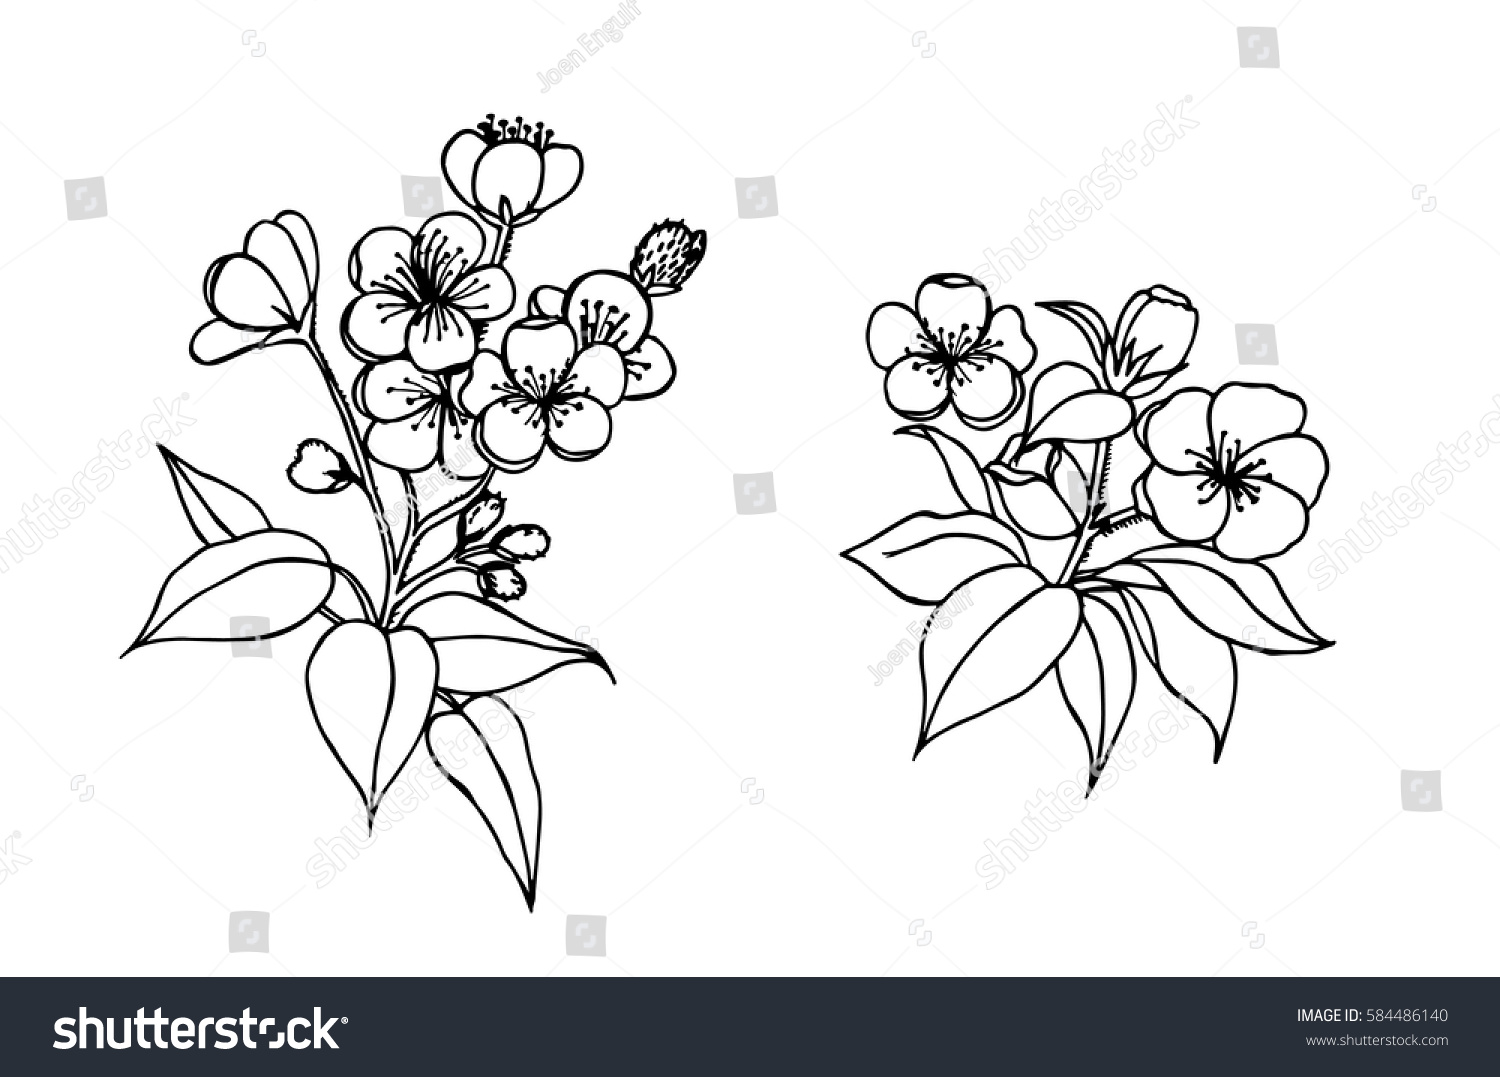 Download Flower Bunch Floral Outline Vector Art Stock Vector 584486140 - Shutterstock